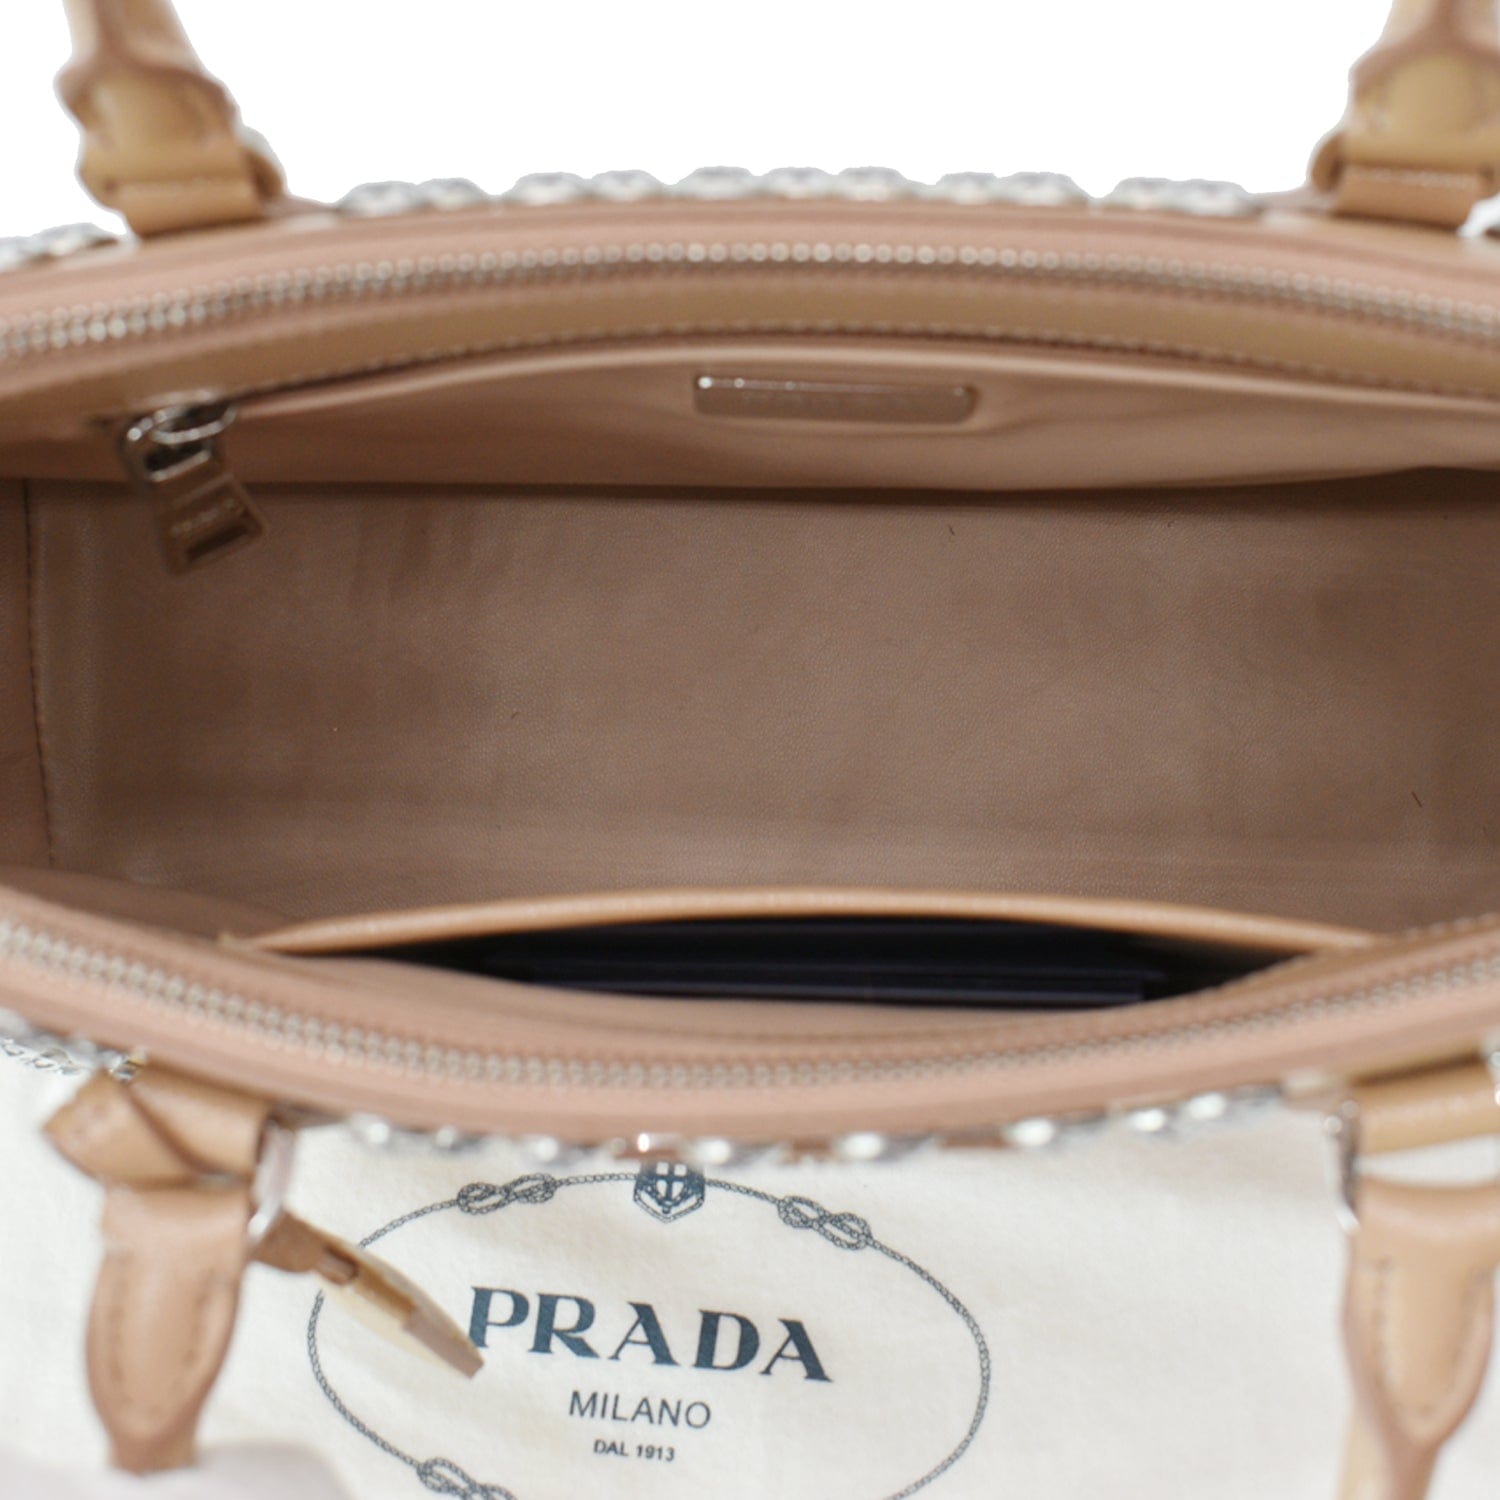 Prada Gardener's Tote Vernice Saffiano Leather Medium - ShopStyle